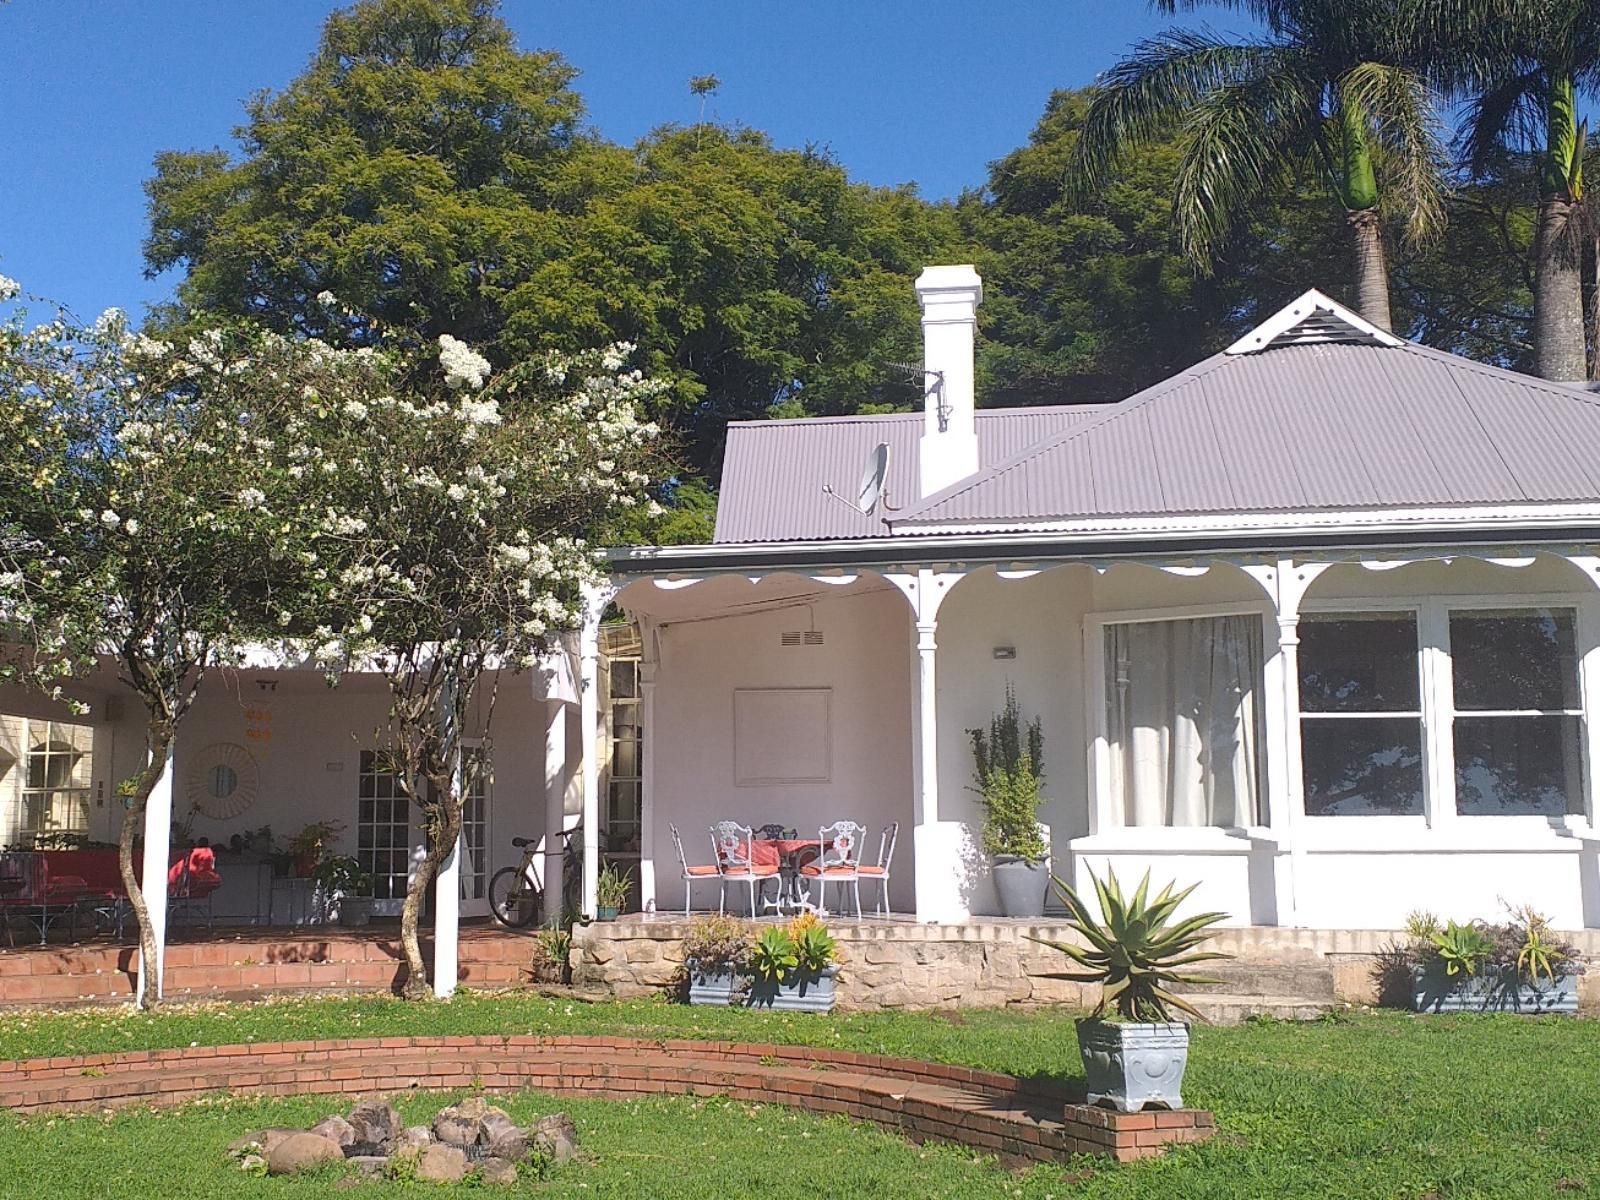 Sugar Hill Manor Eshowe Kwazulu Natal South Africa House, Building, Architecture, Palm Tree, Plant, Nature, Wood